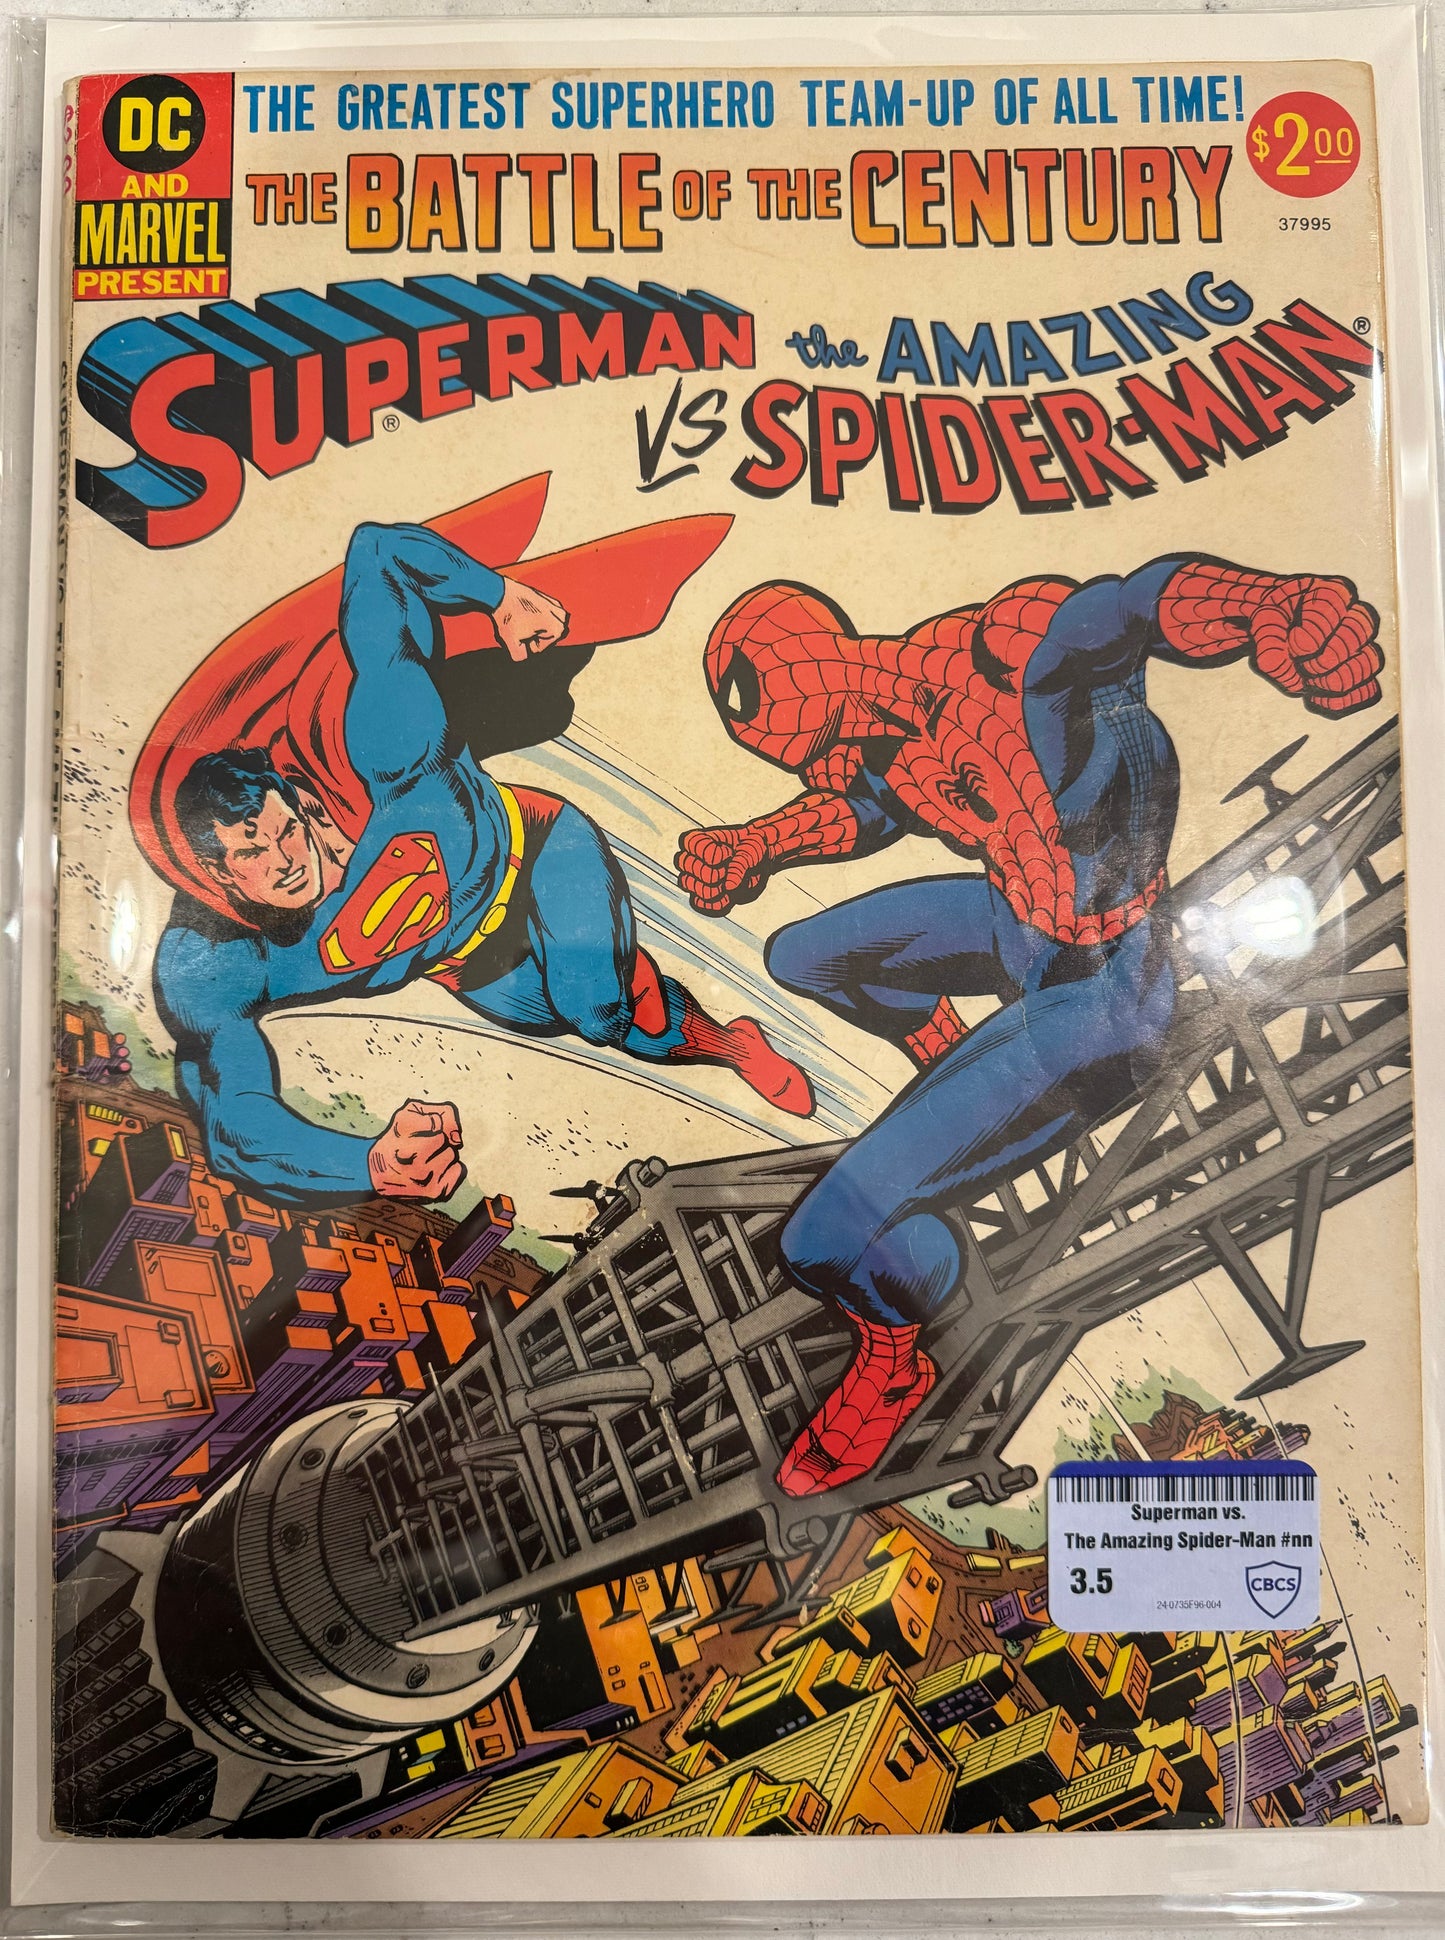 Superman vs The Amazing Spider-Man #nn CBCS Graded 3.5 (Sealed, 1st Marvel/DC Crossover